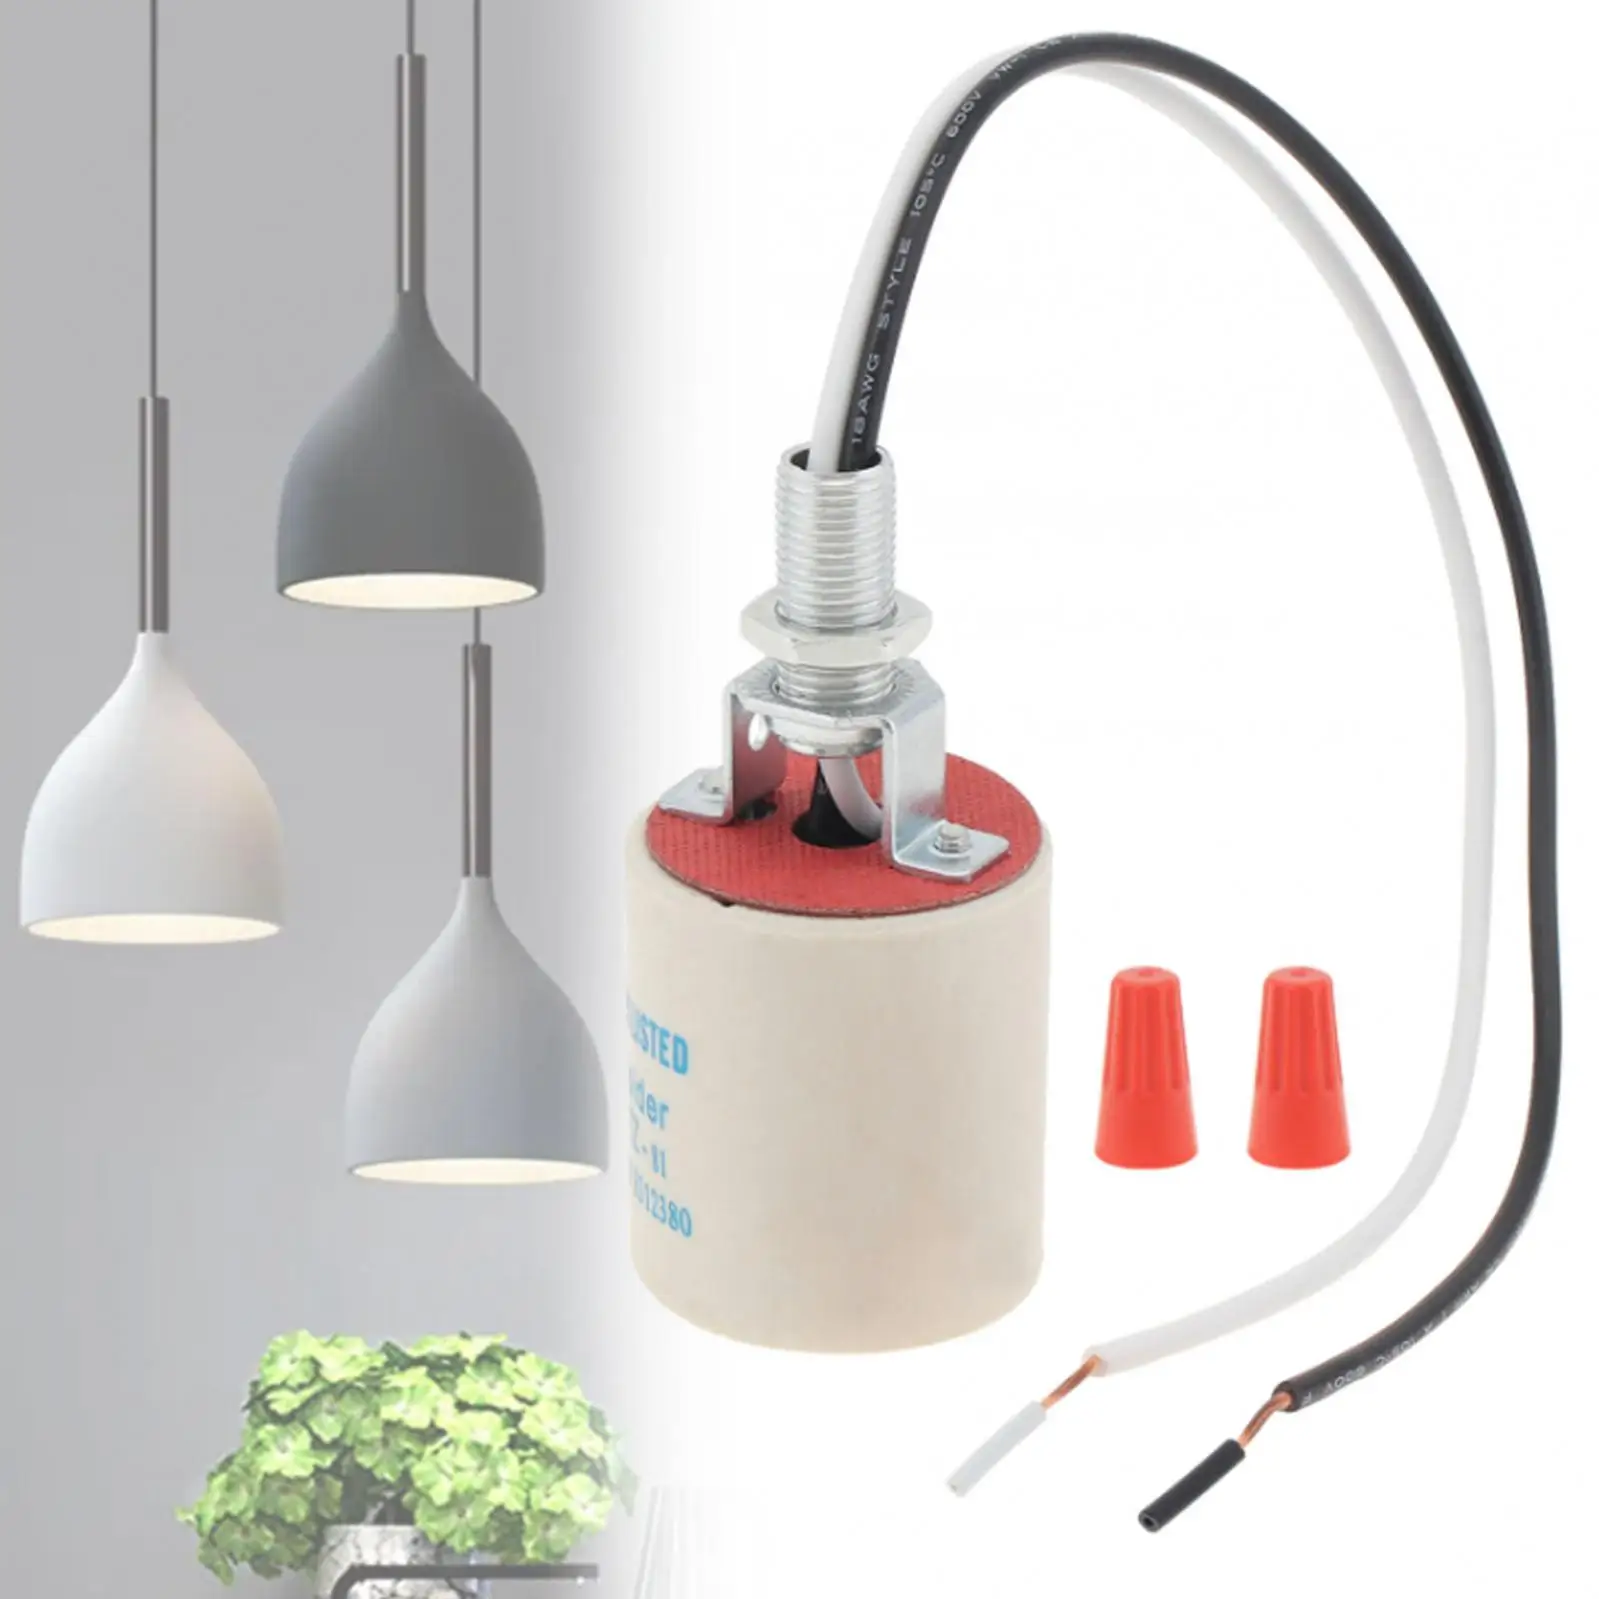 E26 Ceramic Light Socket High Temperature Resistance Porcelain Lamp Holder for Incandescent Lamp LED Light Bulbs Replacement